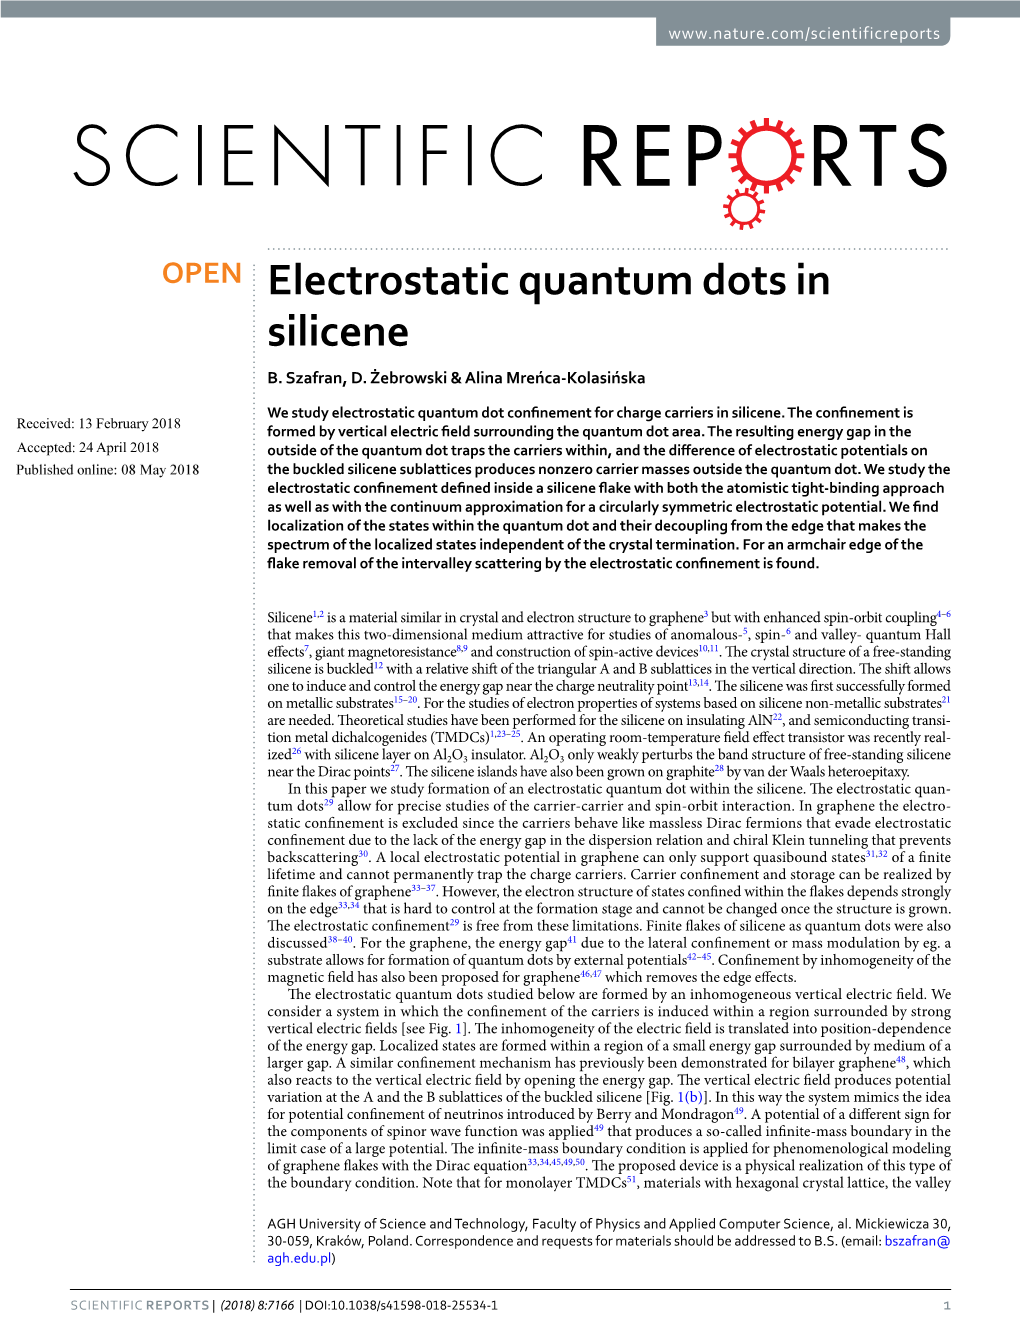 Electrostatic Quantum Dots in Silicene B